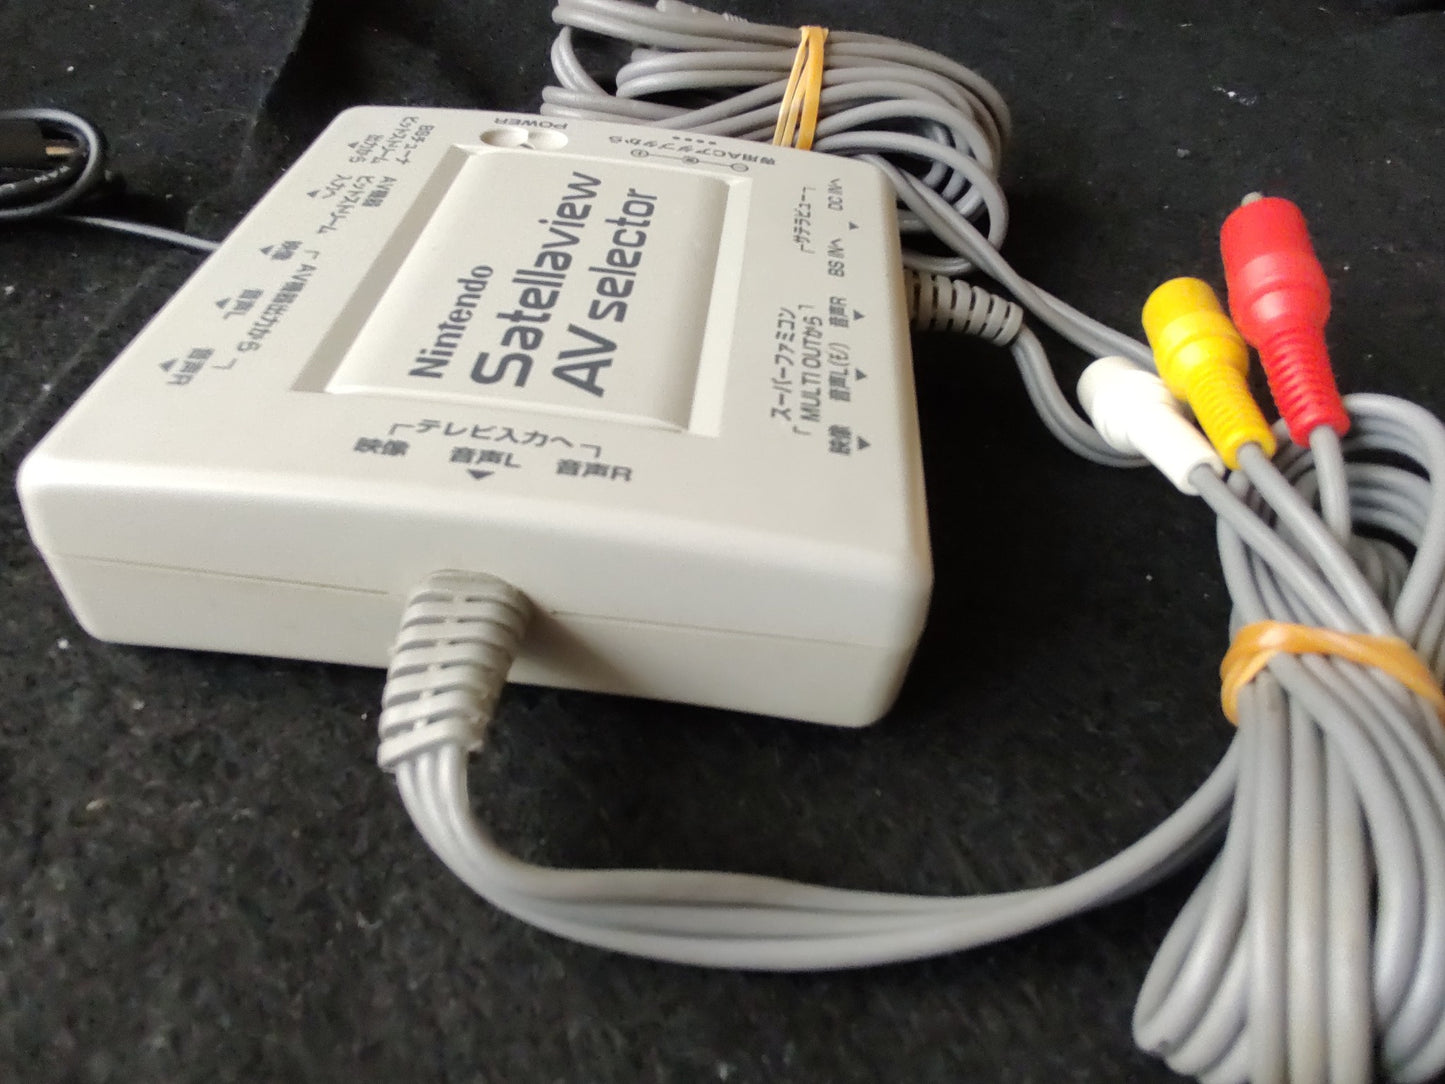 AC Adapter SHVC-032 and AV selector set for Nintendo Satellaview SHVC-033-f0908-